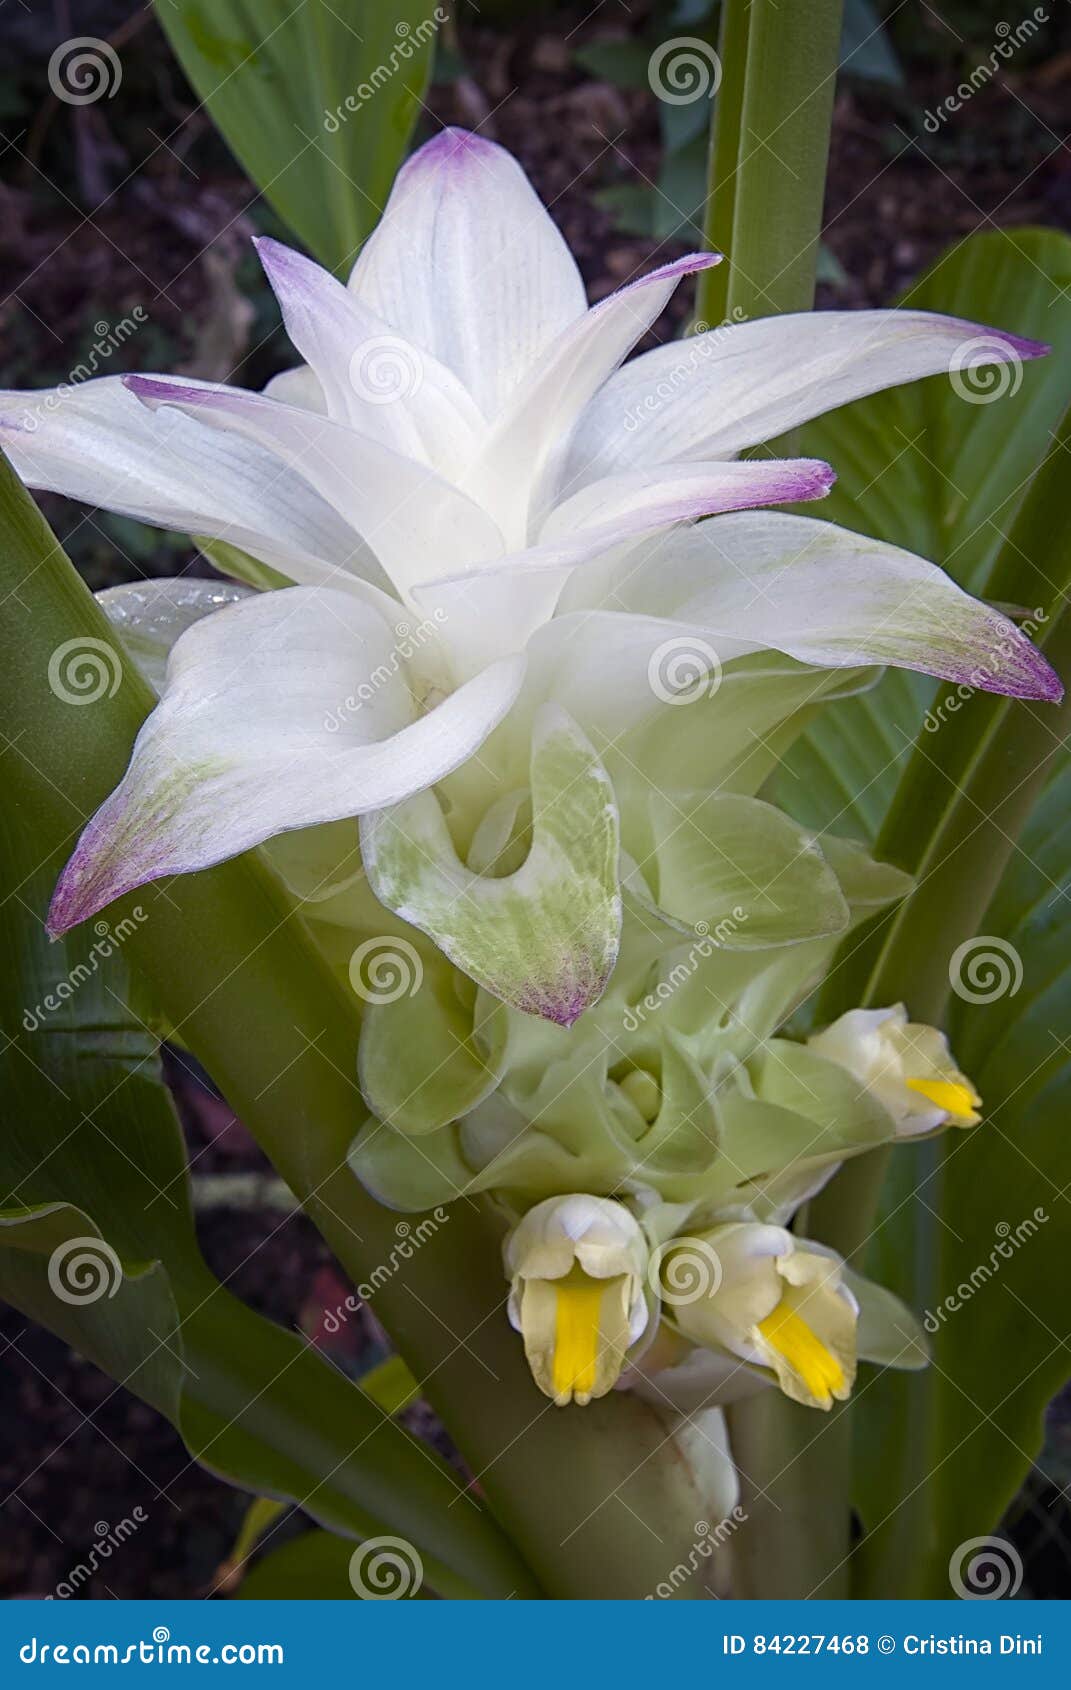 371 Curcuma Longa Flower Stock Photos - Free & Royalty-Free Stock Photos  from Dreamstime